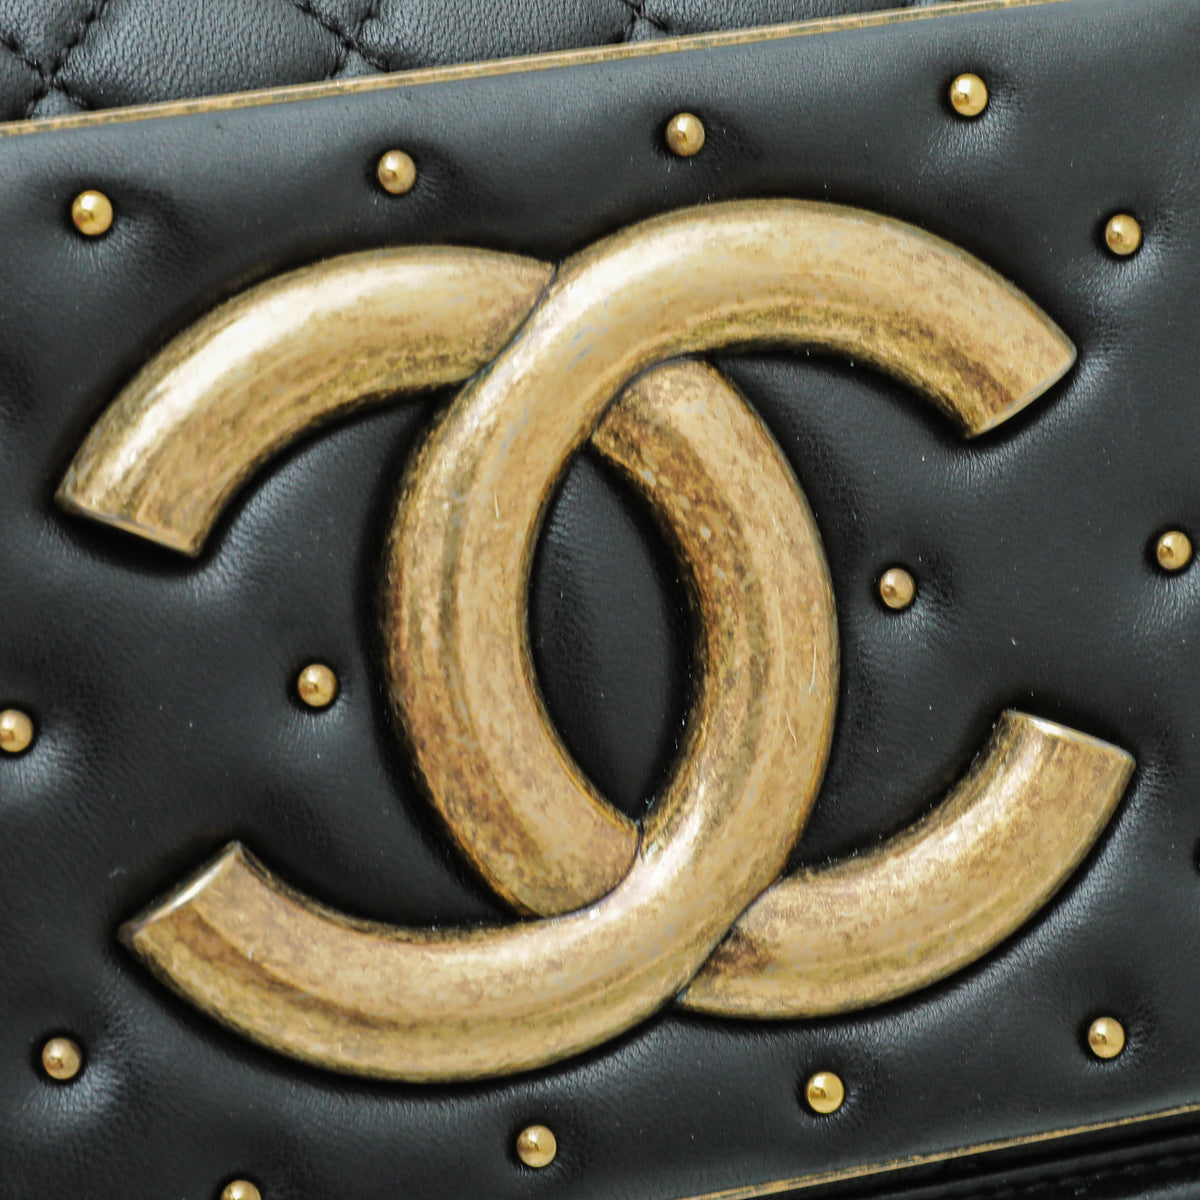 Chanel Black Vintage Studded Boy Brick Horizontal Chain Bag